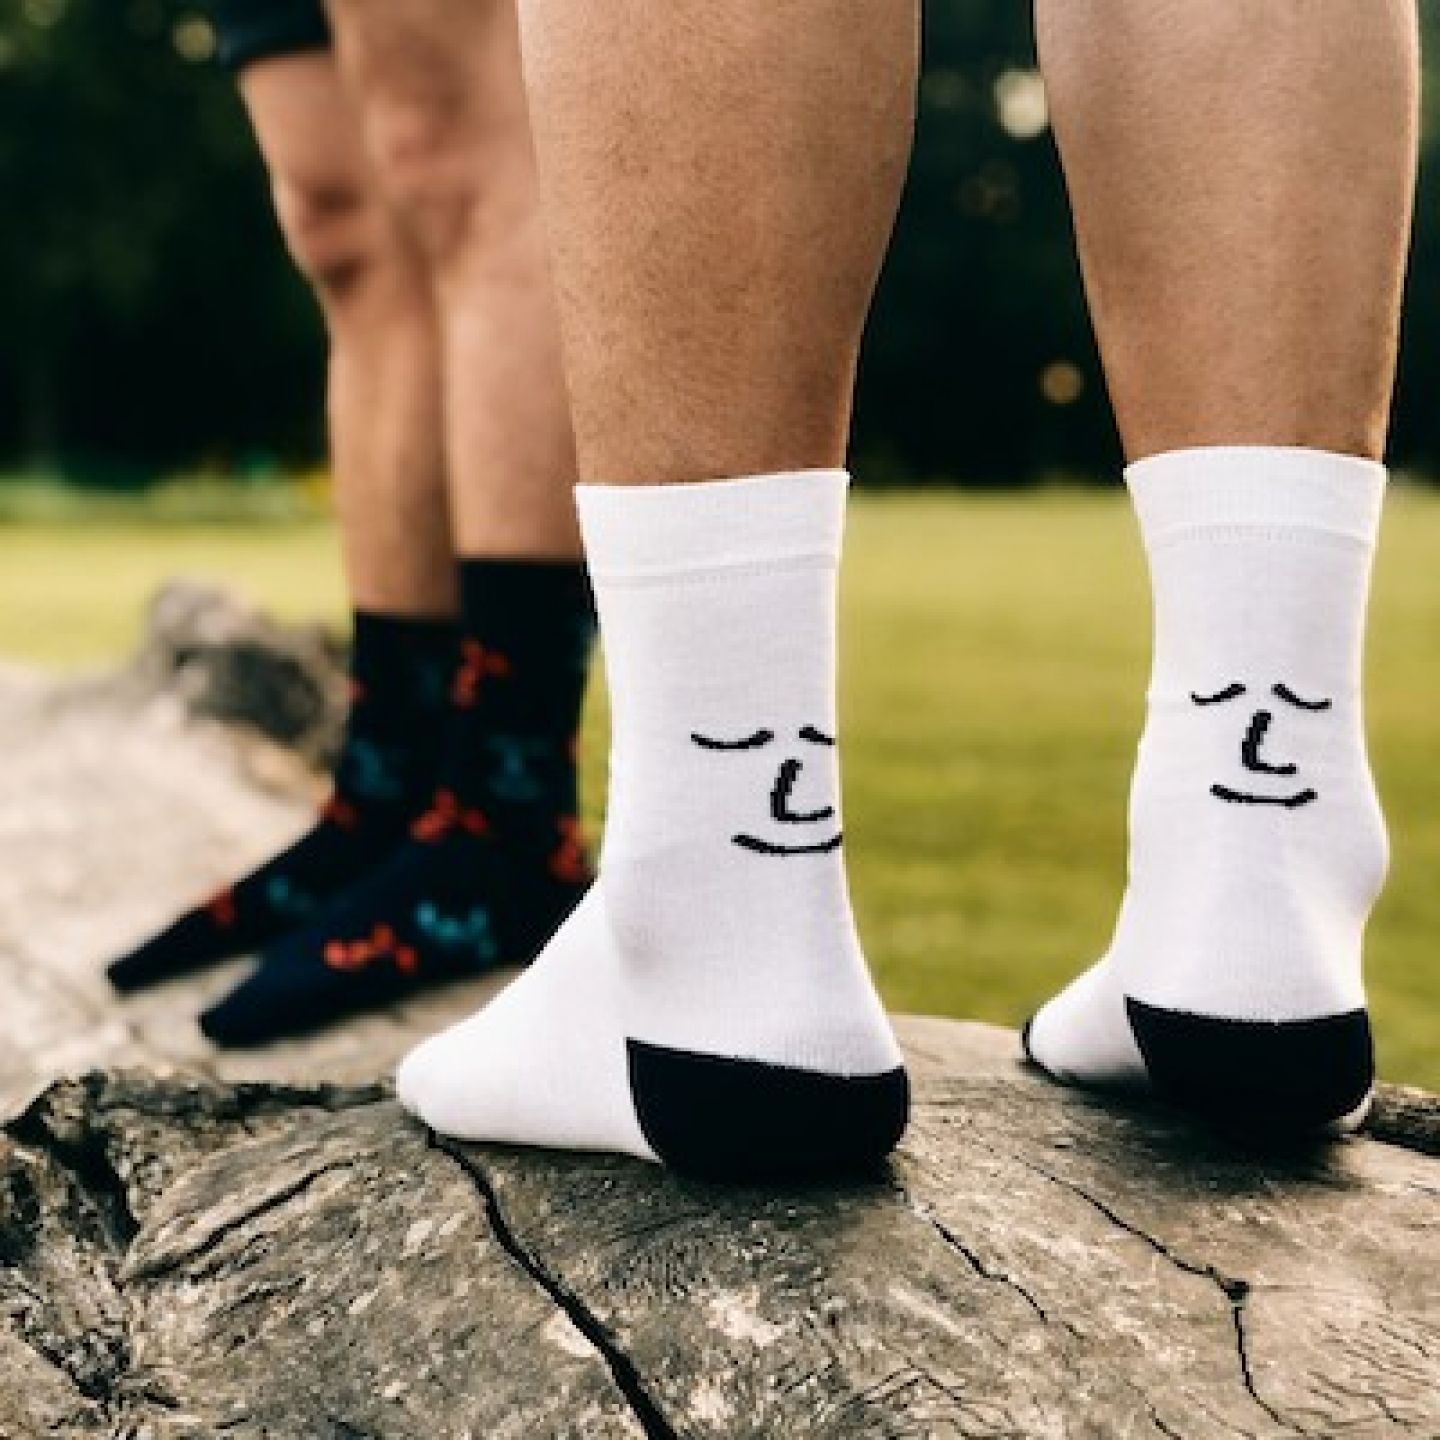 Two people wearing socks branded with Leiho logo